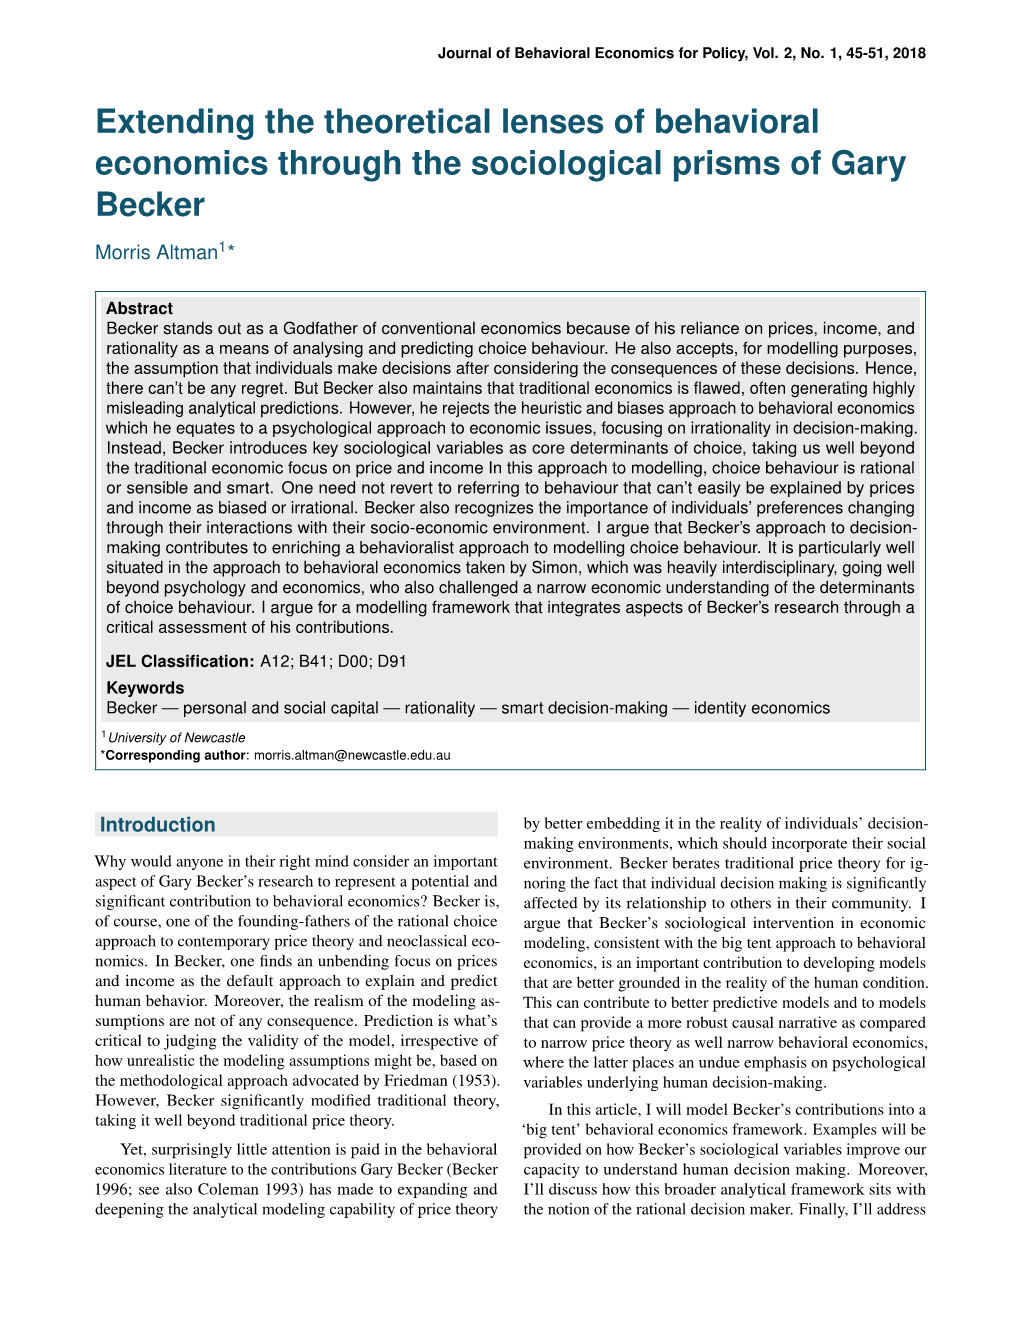 Extending the Theoretical Lenses of Behavioral Economics Through the Sociological Prisms of Gary Becker